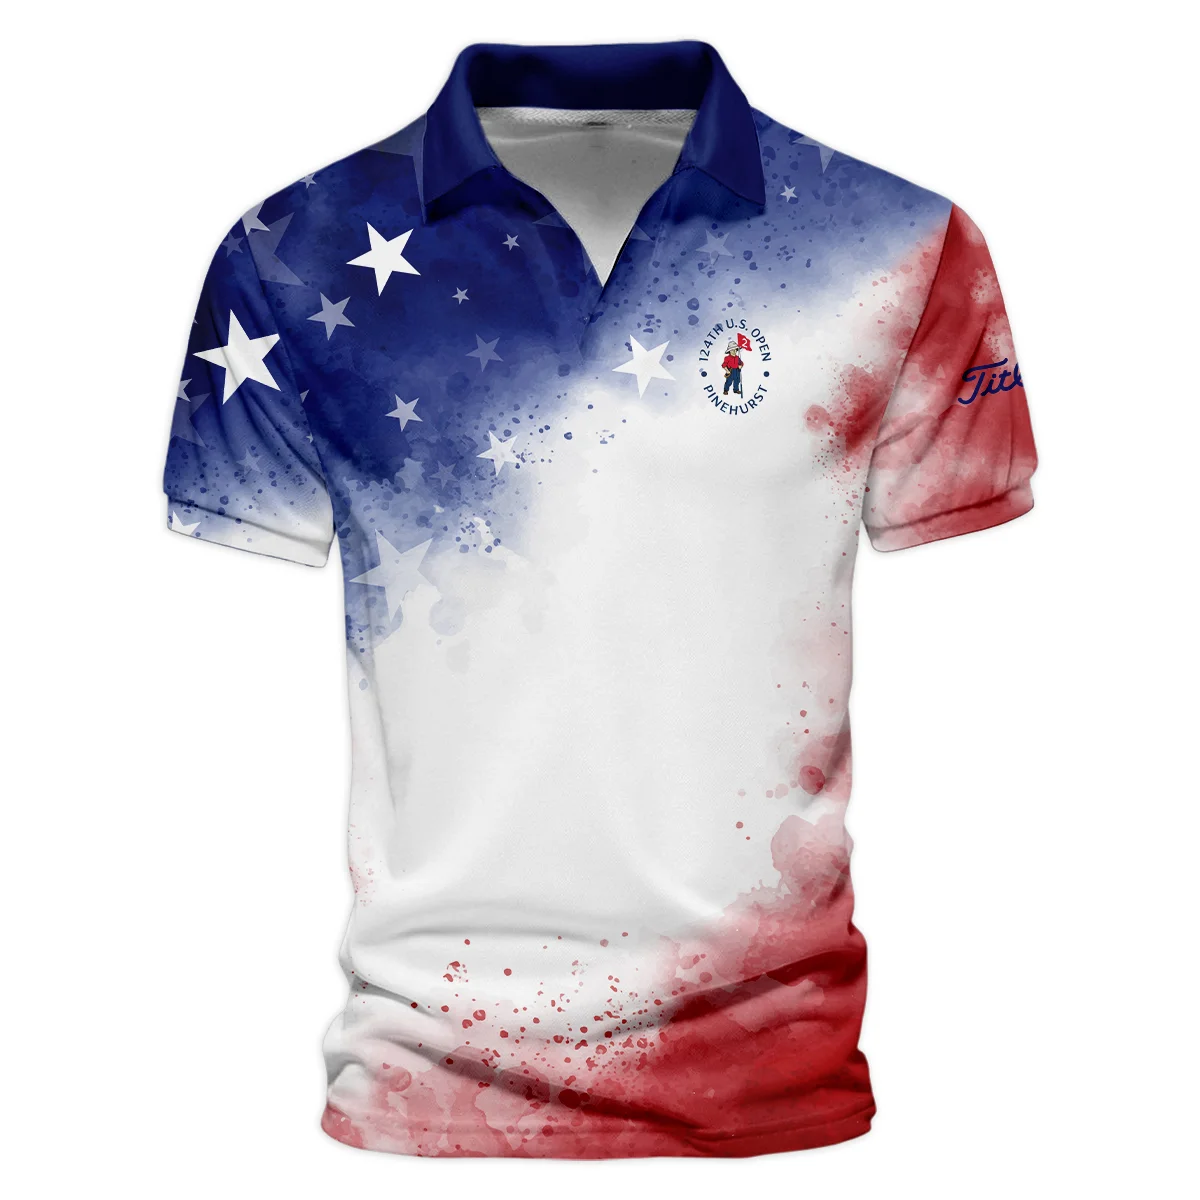 124th U.S. Open Pinehurst Titleist Blue Red Watercolor Star White Backgound Polo Shirt Mandarin Collar Polo Shirt